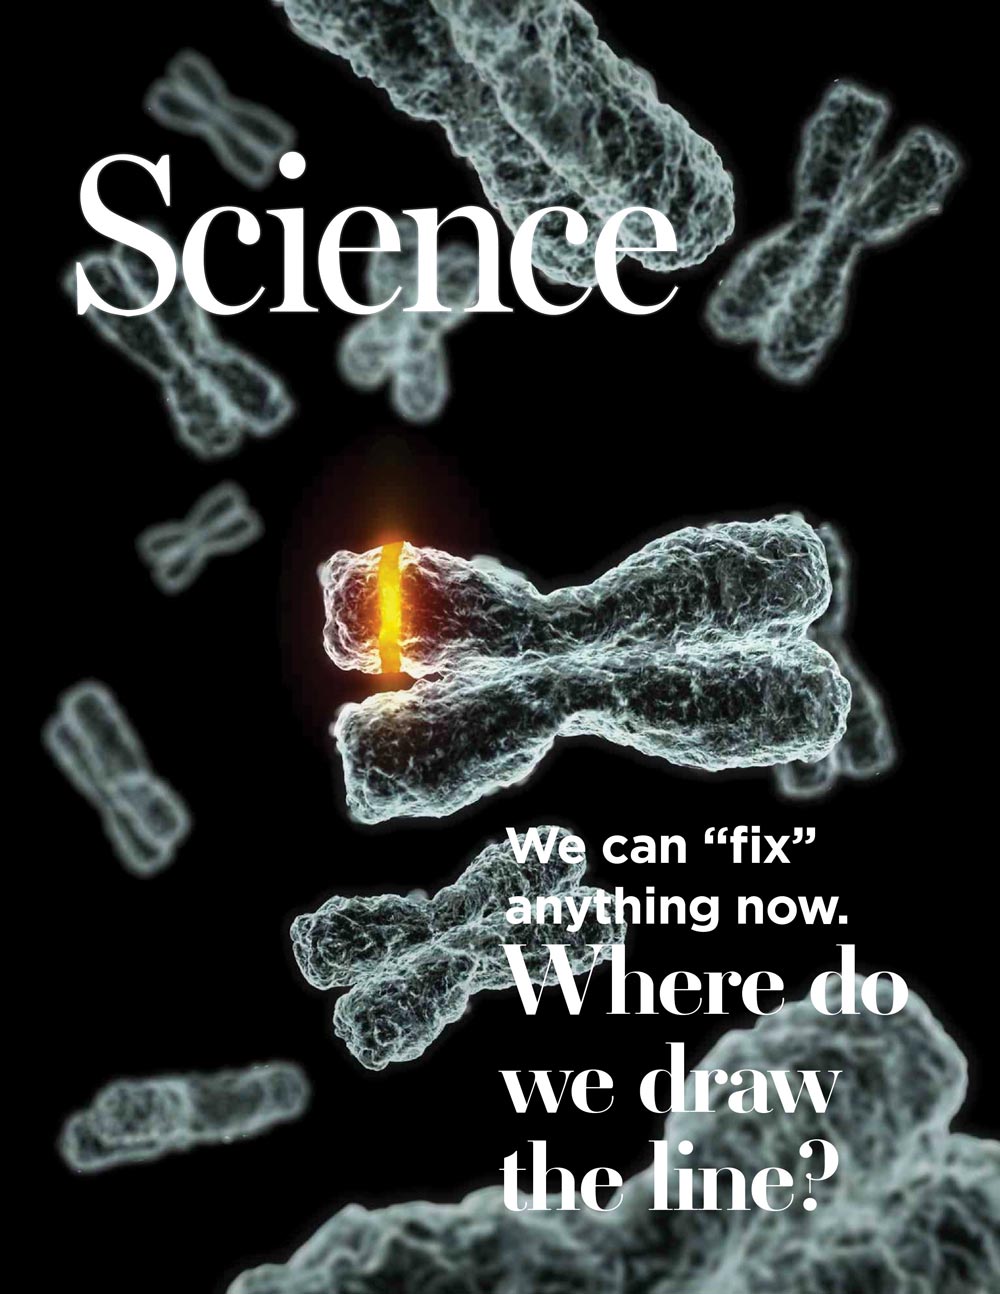 Fictional magazine cover exploring the implications of CRISPR